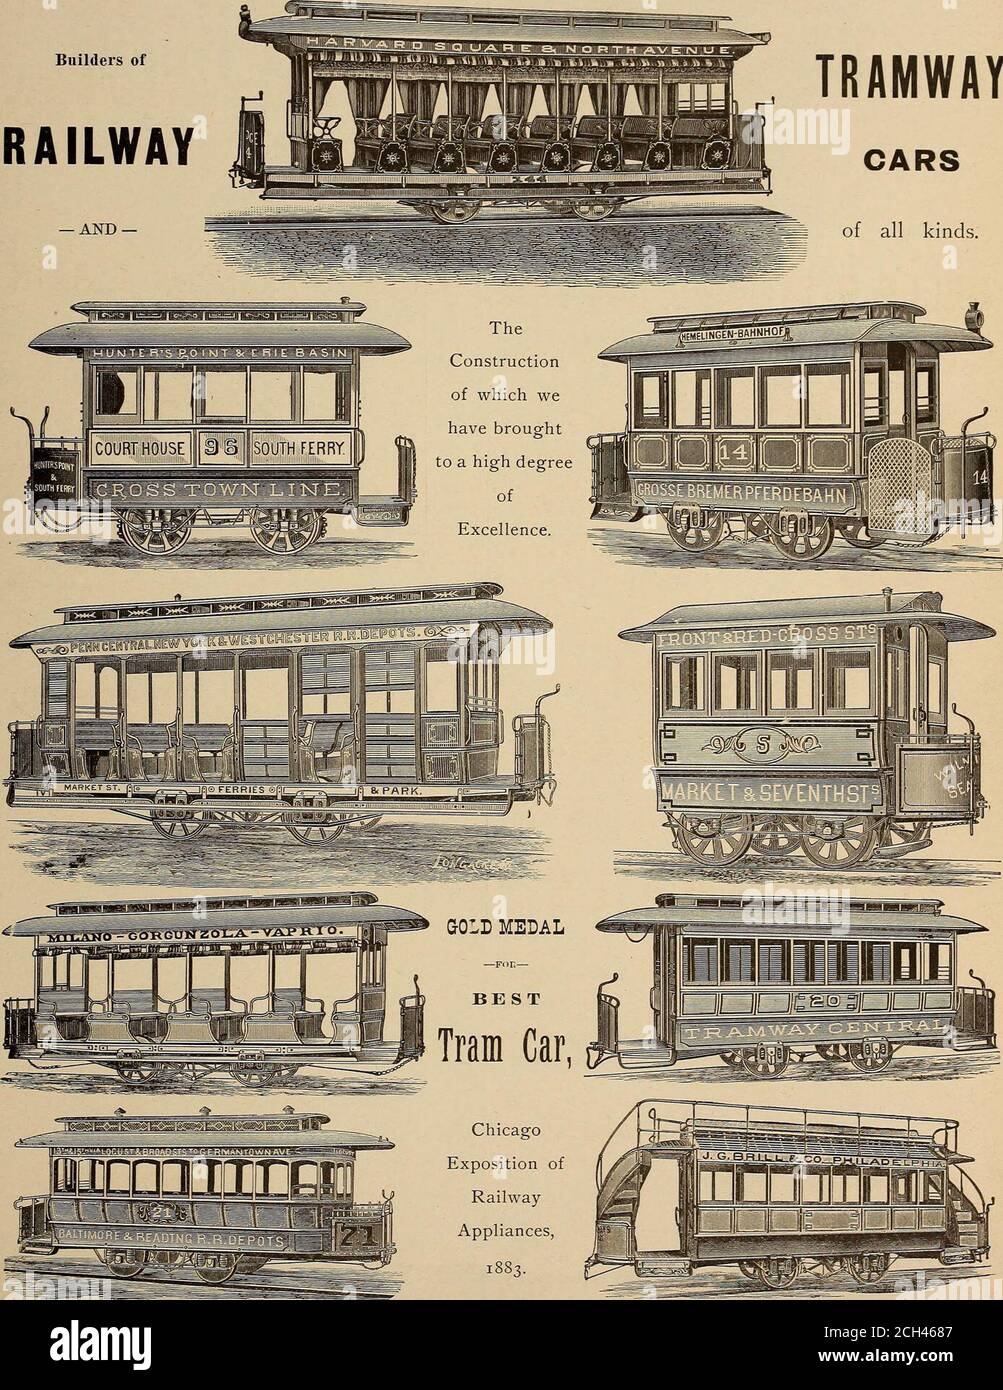 . The Street railway journal . Decembee, 1884.] THE STREET RAILWAY JOURNAL. 41 J. C- BRILL & CO., Builders of RAILWAY TRAMWAY CARS of all kinds.. C^BLE iLDDBES! -BRILL PHILADELPHIA. 42 THE STREET RAILWAY JOURNAL. [December, 1884. G. W, Seoggan, H. L. Martin, J. P. Hudson, M. F. Thomson, n. J. Scoggan. SGOGGAN, HUDSON & CO., LOUISVILLE, KZ-5T.,Wholesale Dealers in Stock Photo